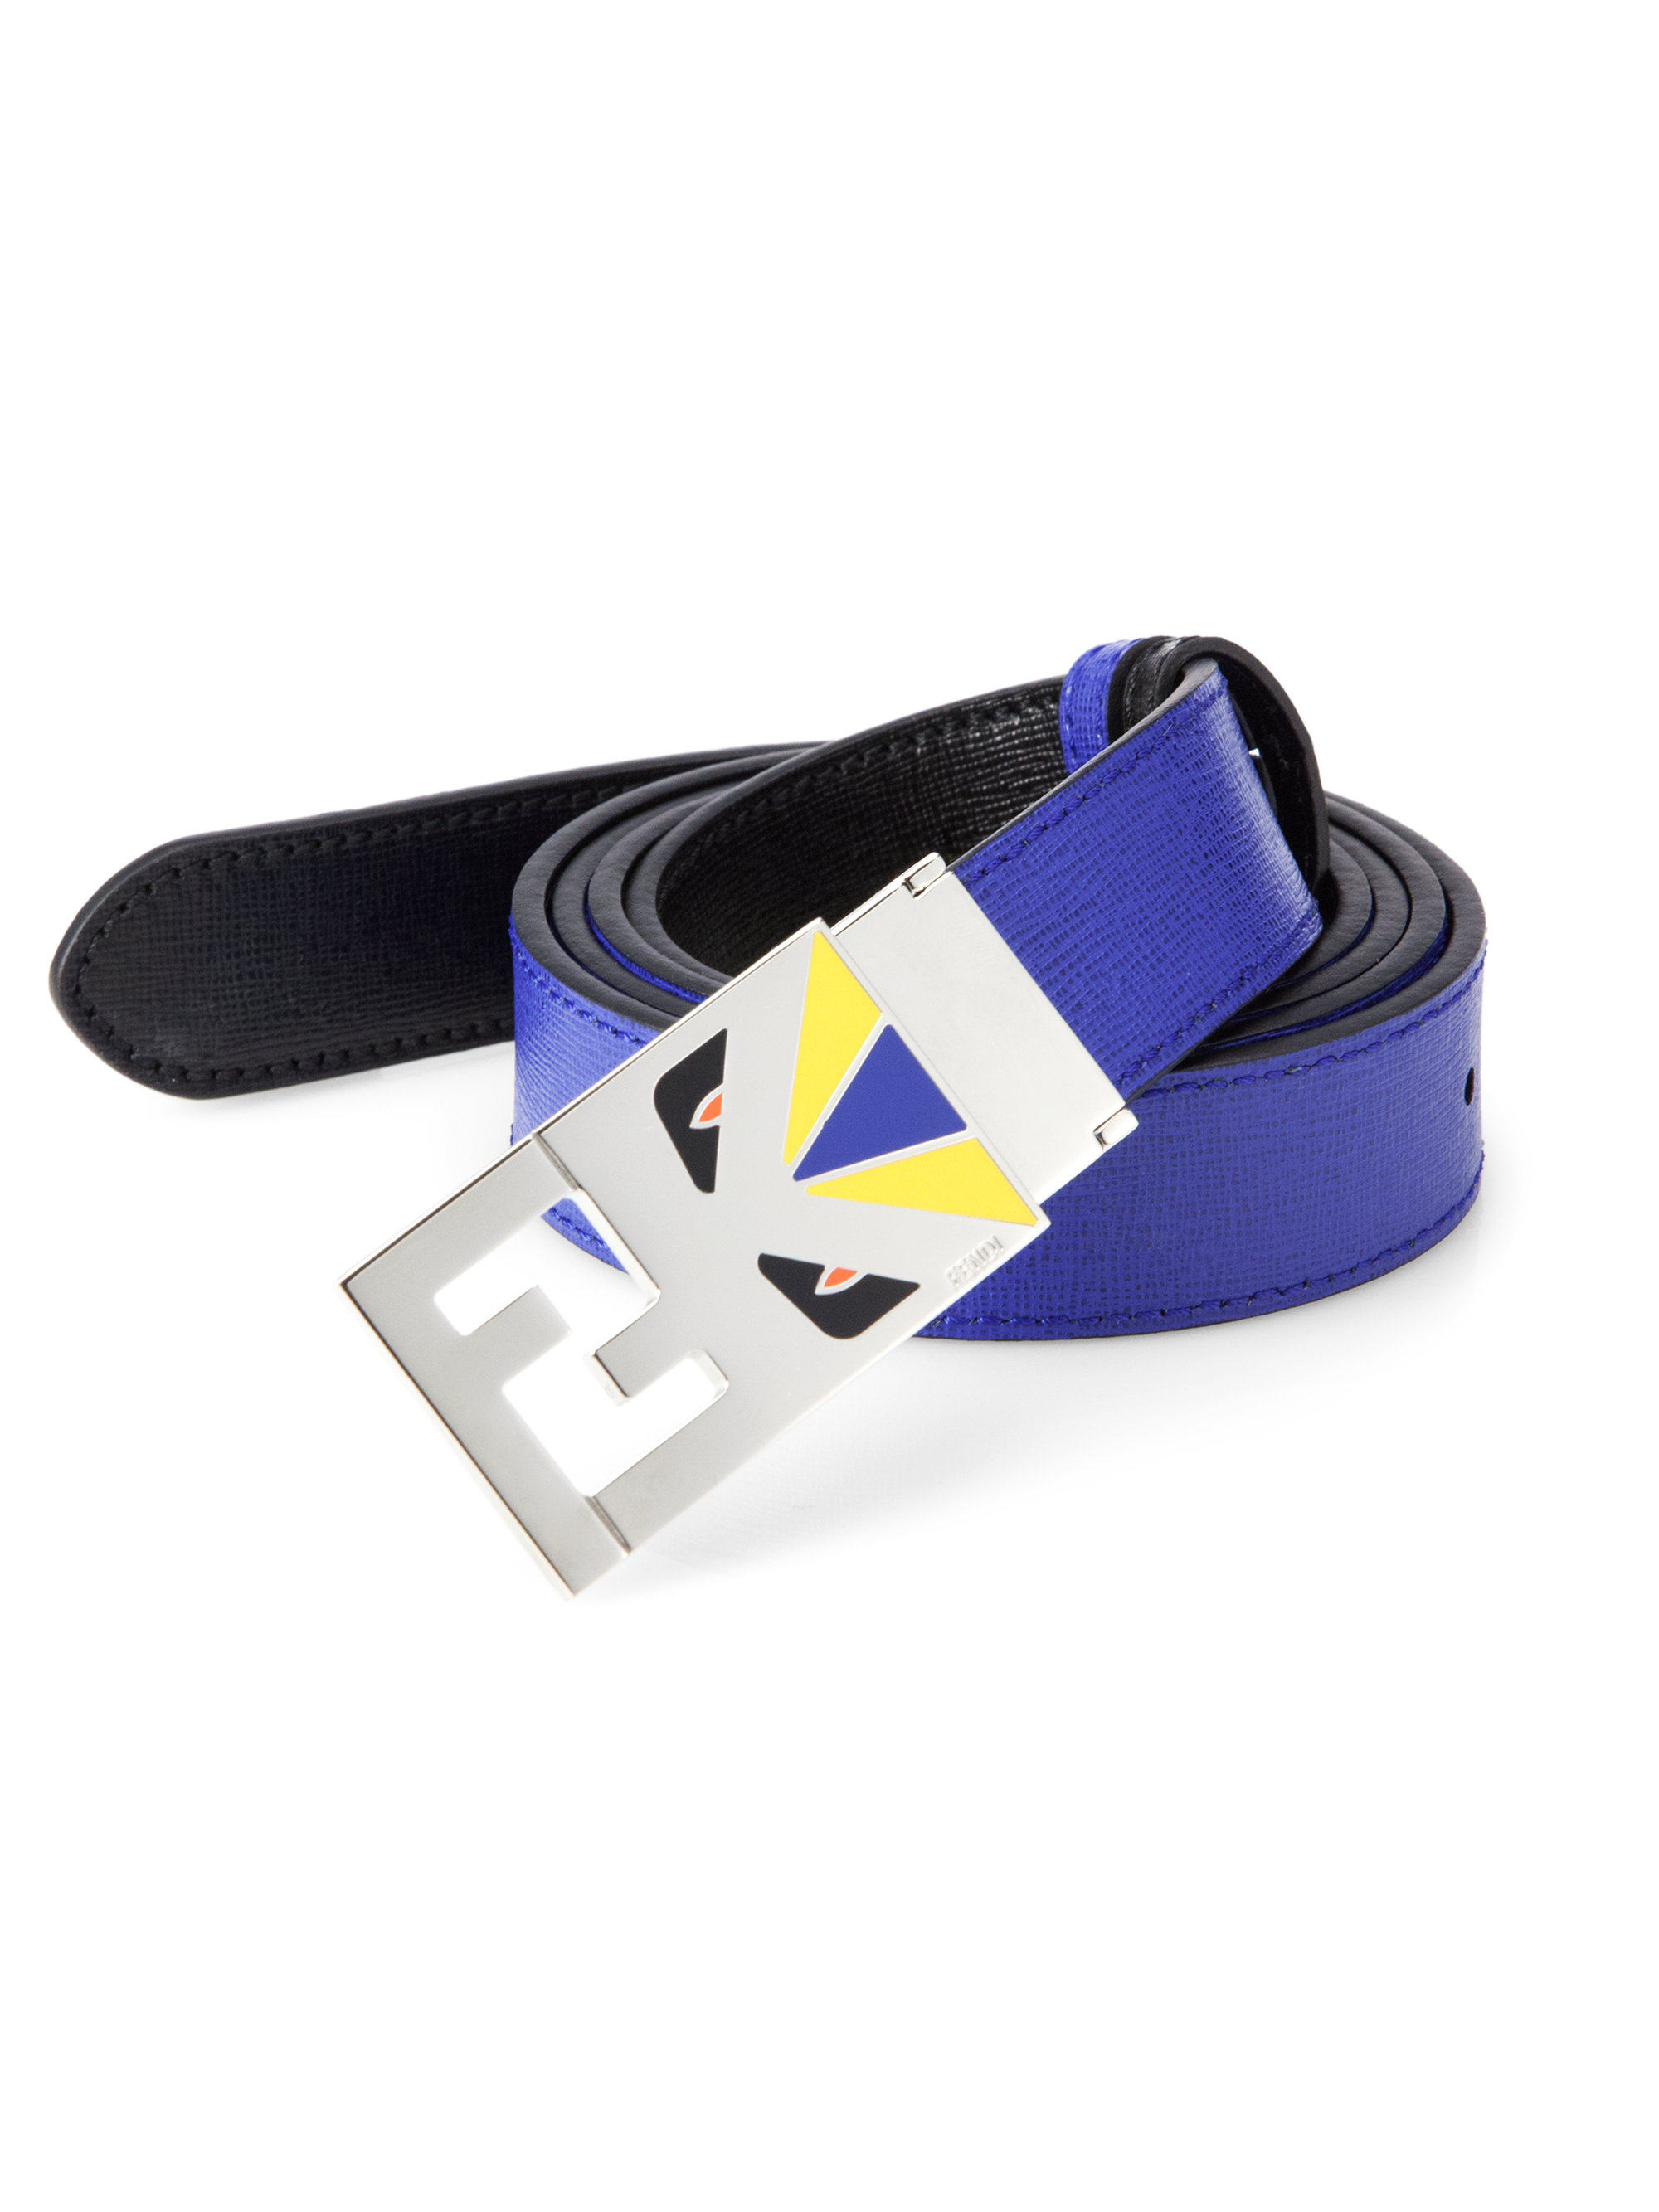 Fendi Colorblocked Belt in Cobalt-Black for Men - Lyst